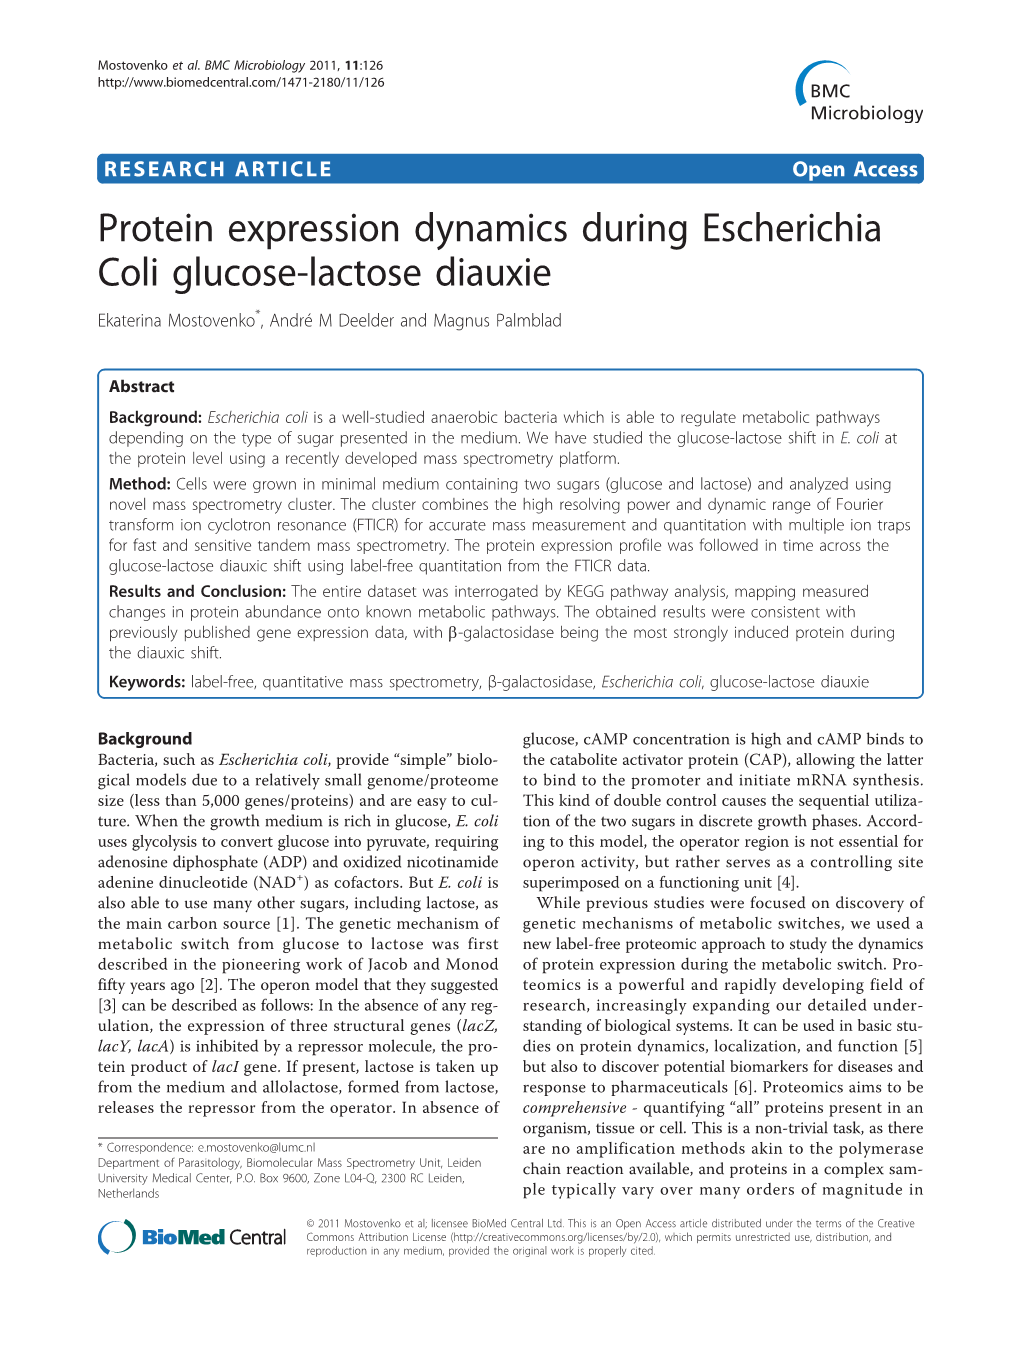 Protein Expression Dynamics During Escherichia Coli Glucose-Lactose Diauxie Ekaterina Mostovenko*, André M Deelder and Magnus Palmblad